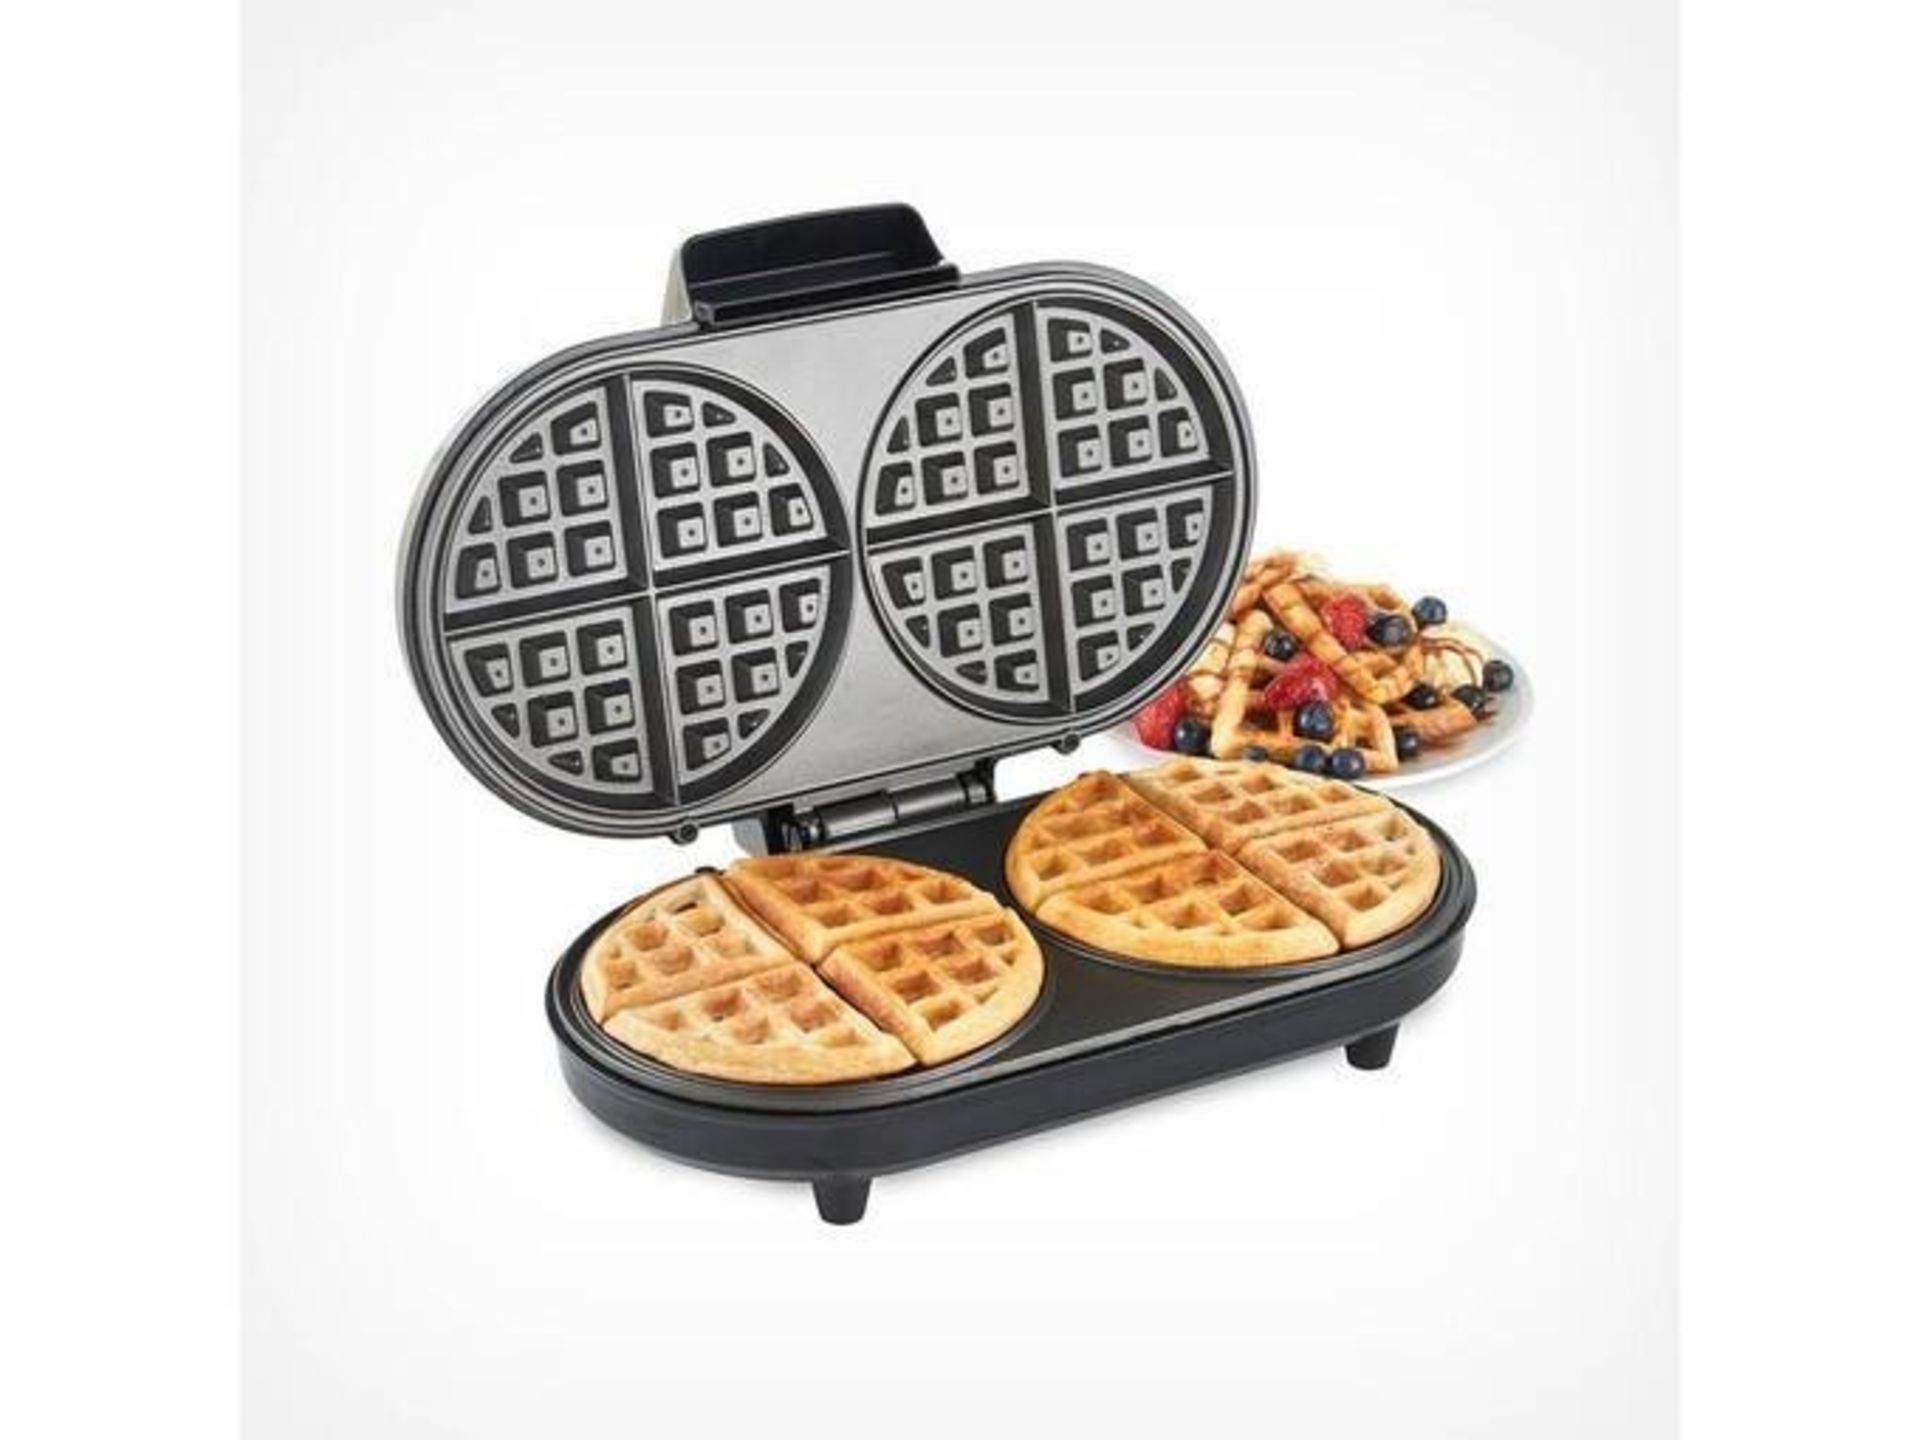 VonShef Waffle Maker (ER51) The VonShef waffle maker enables the preparation of two round waffles.